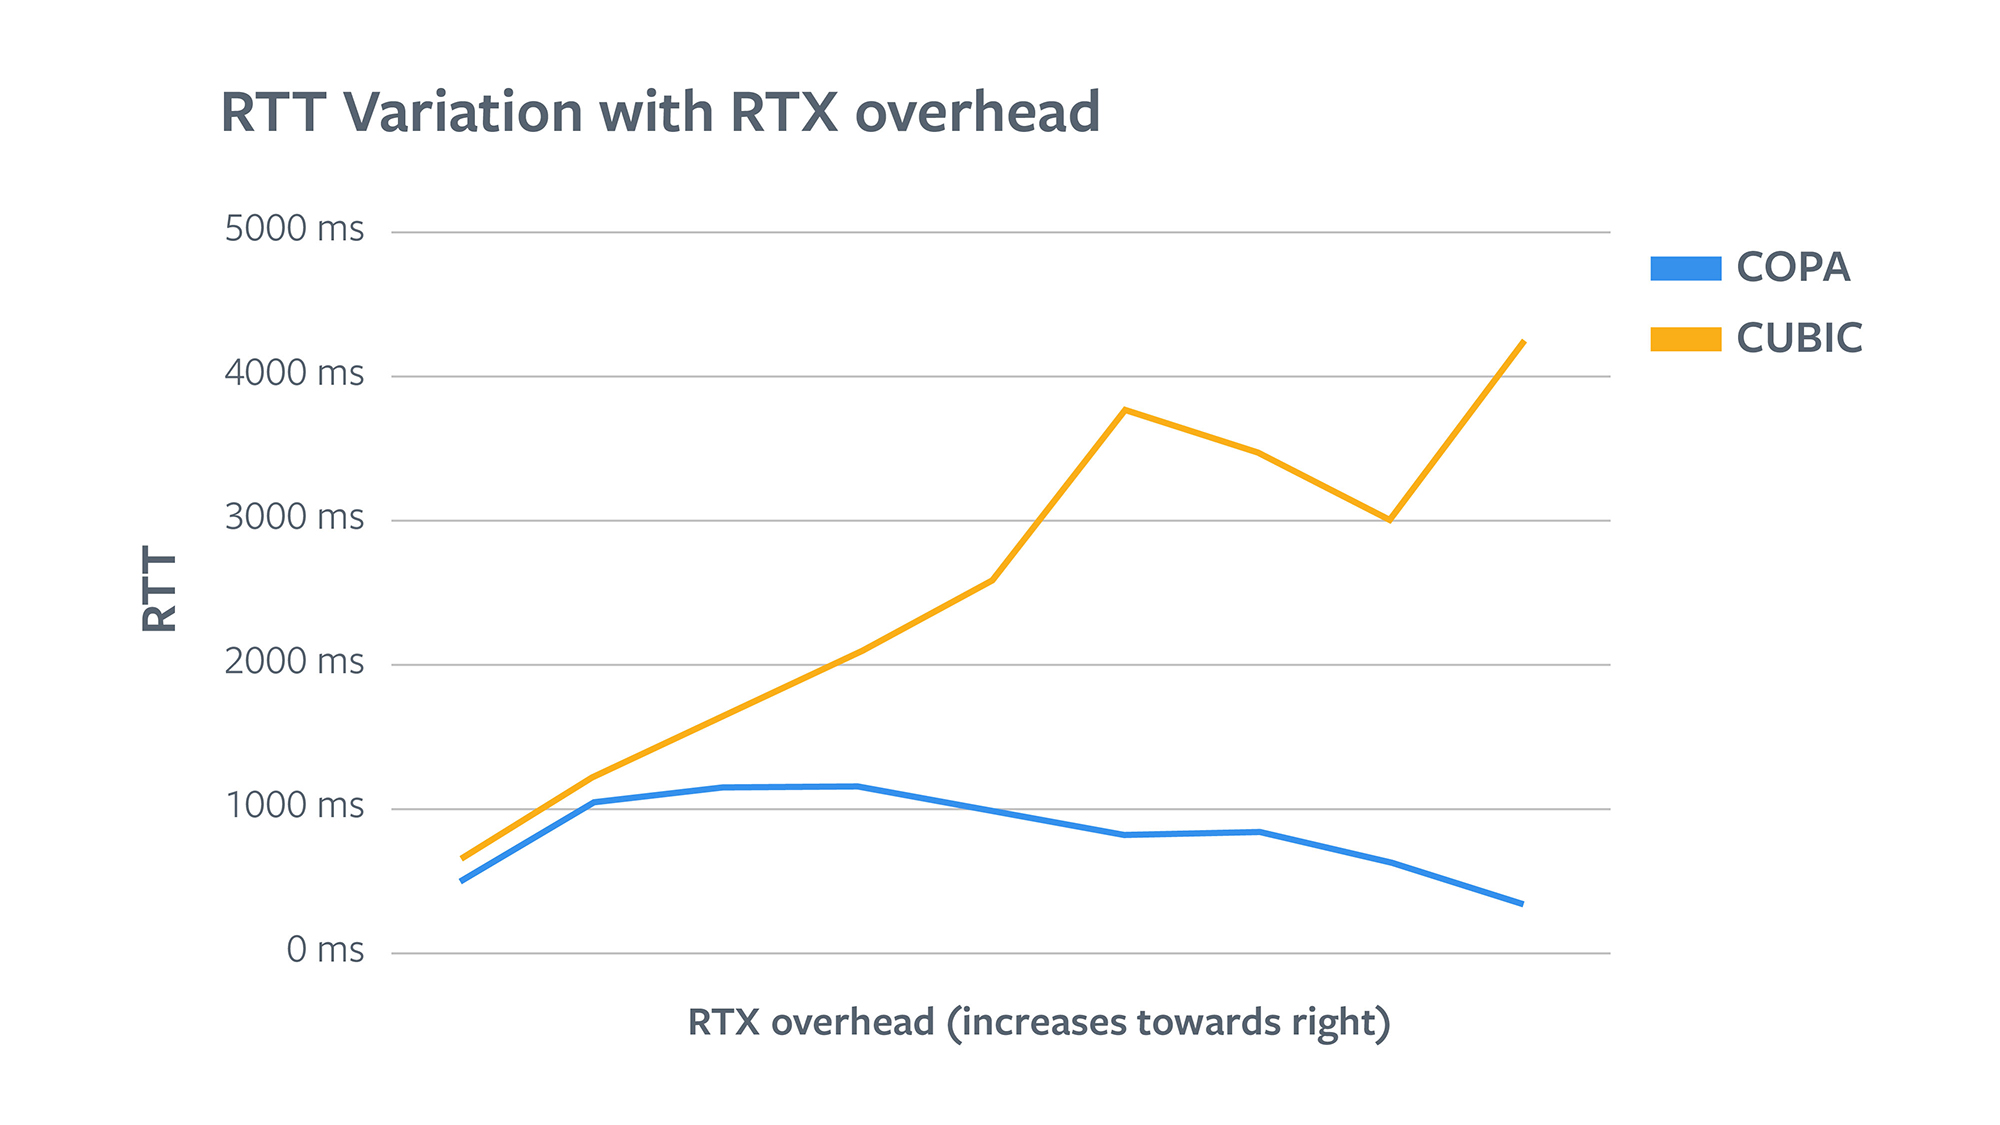 RTT variation with RTX overhead